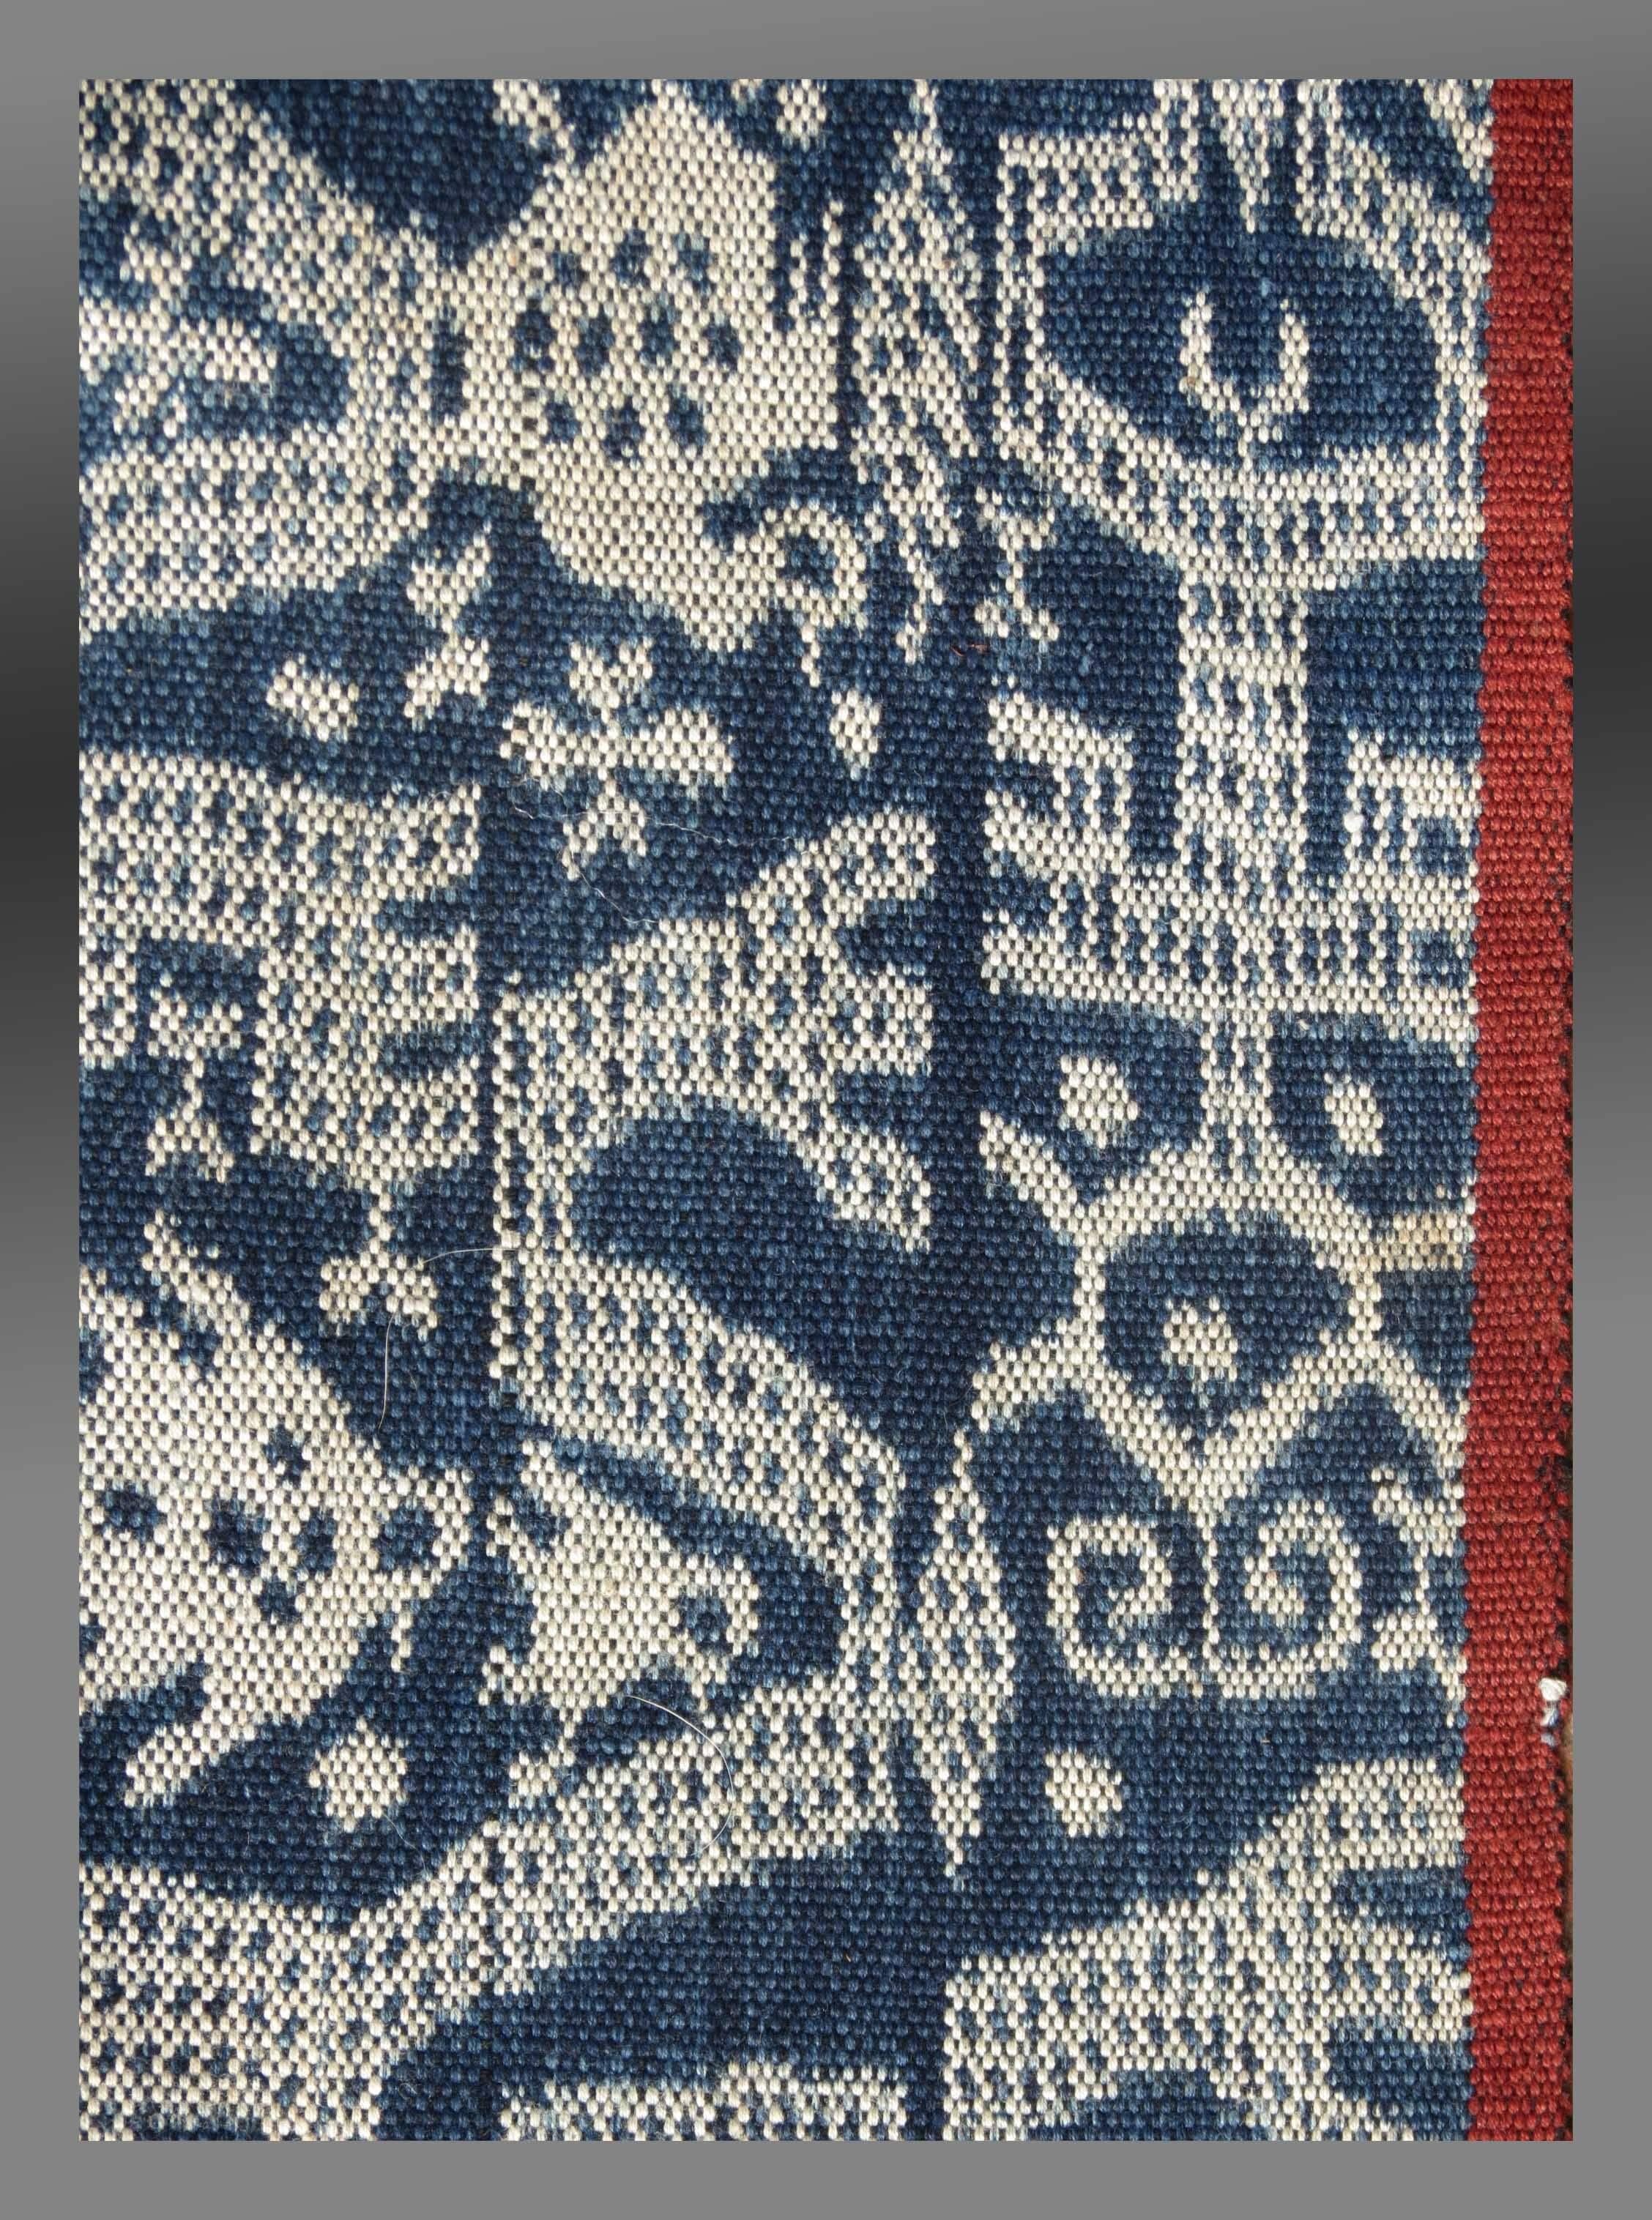 West Timor Tribal Cotton Ikat Textile, Decorative/Unusual, 1960s-1970s 4